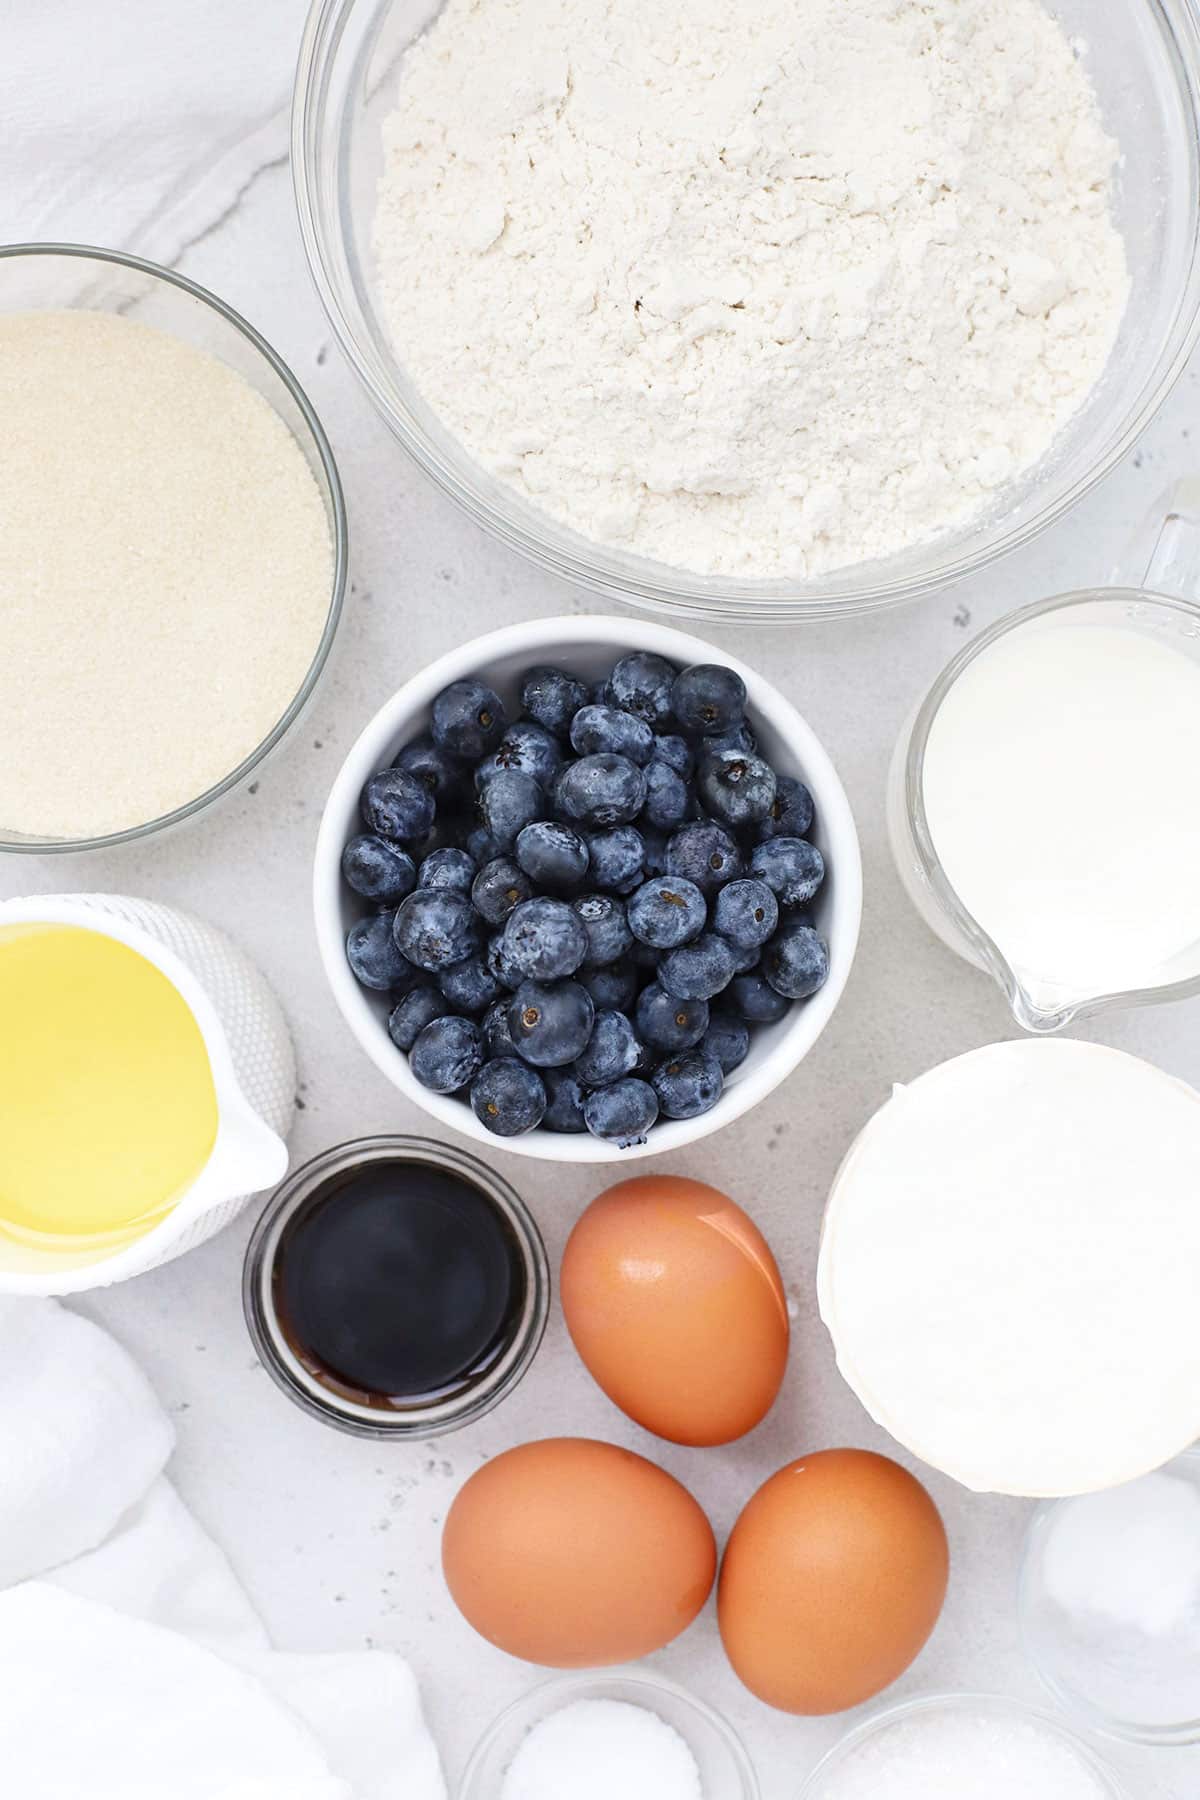 Ingredients for gluten-free blueberry muffins